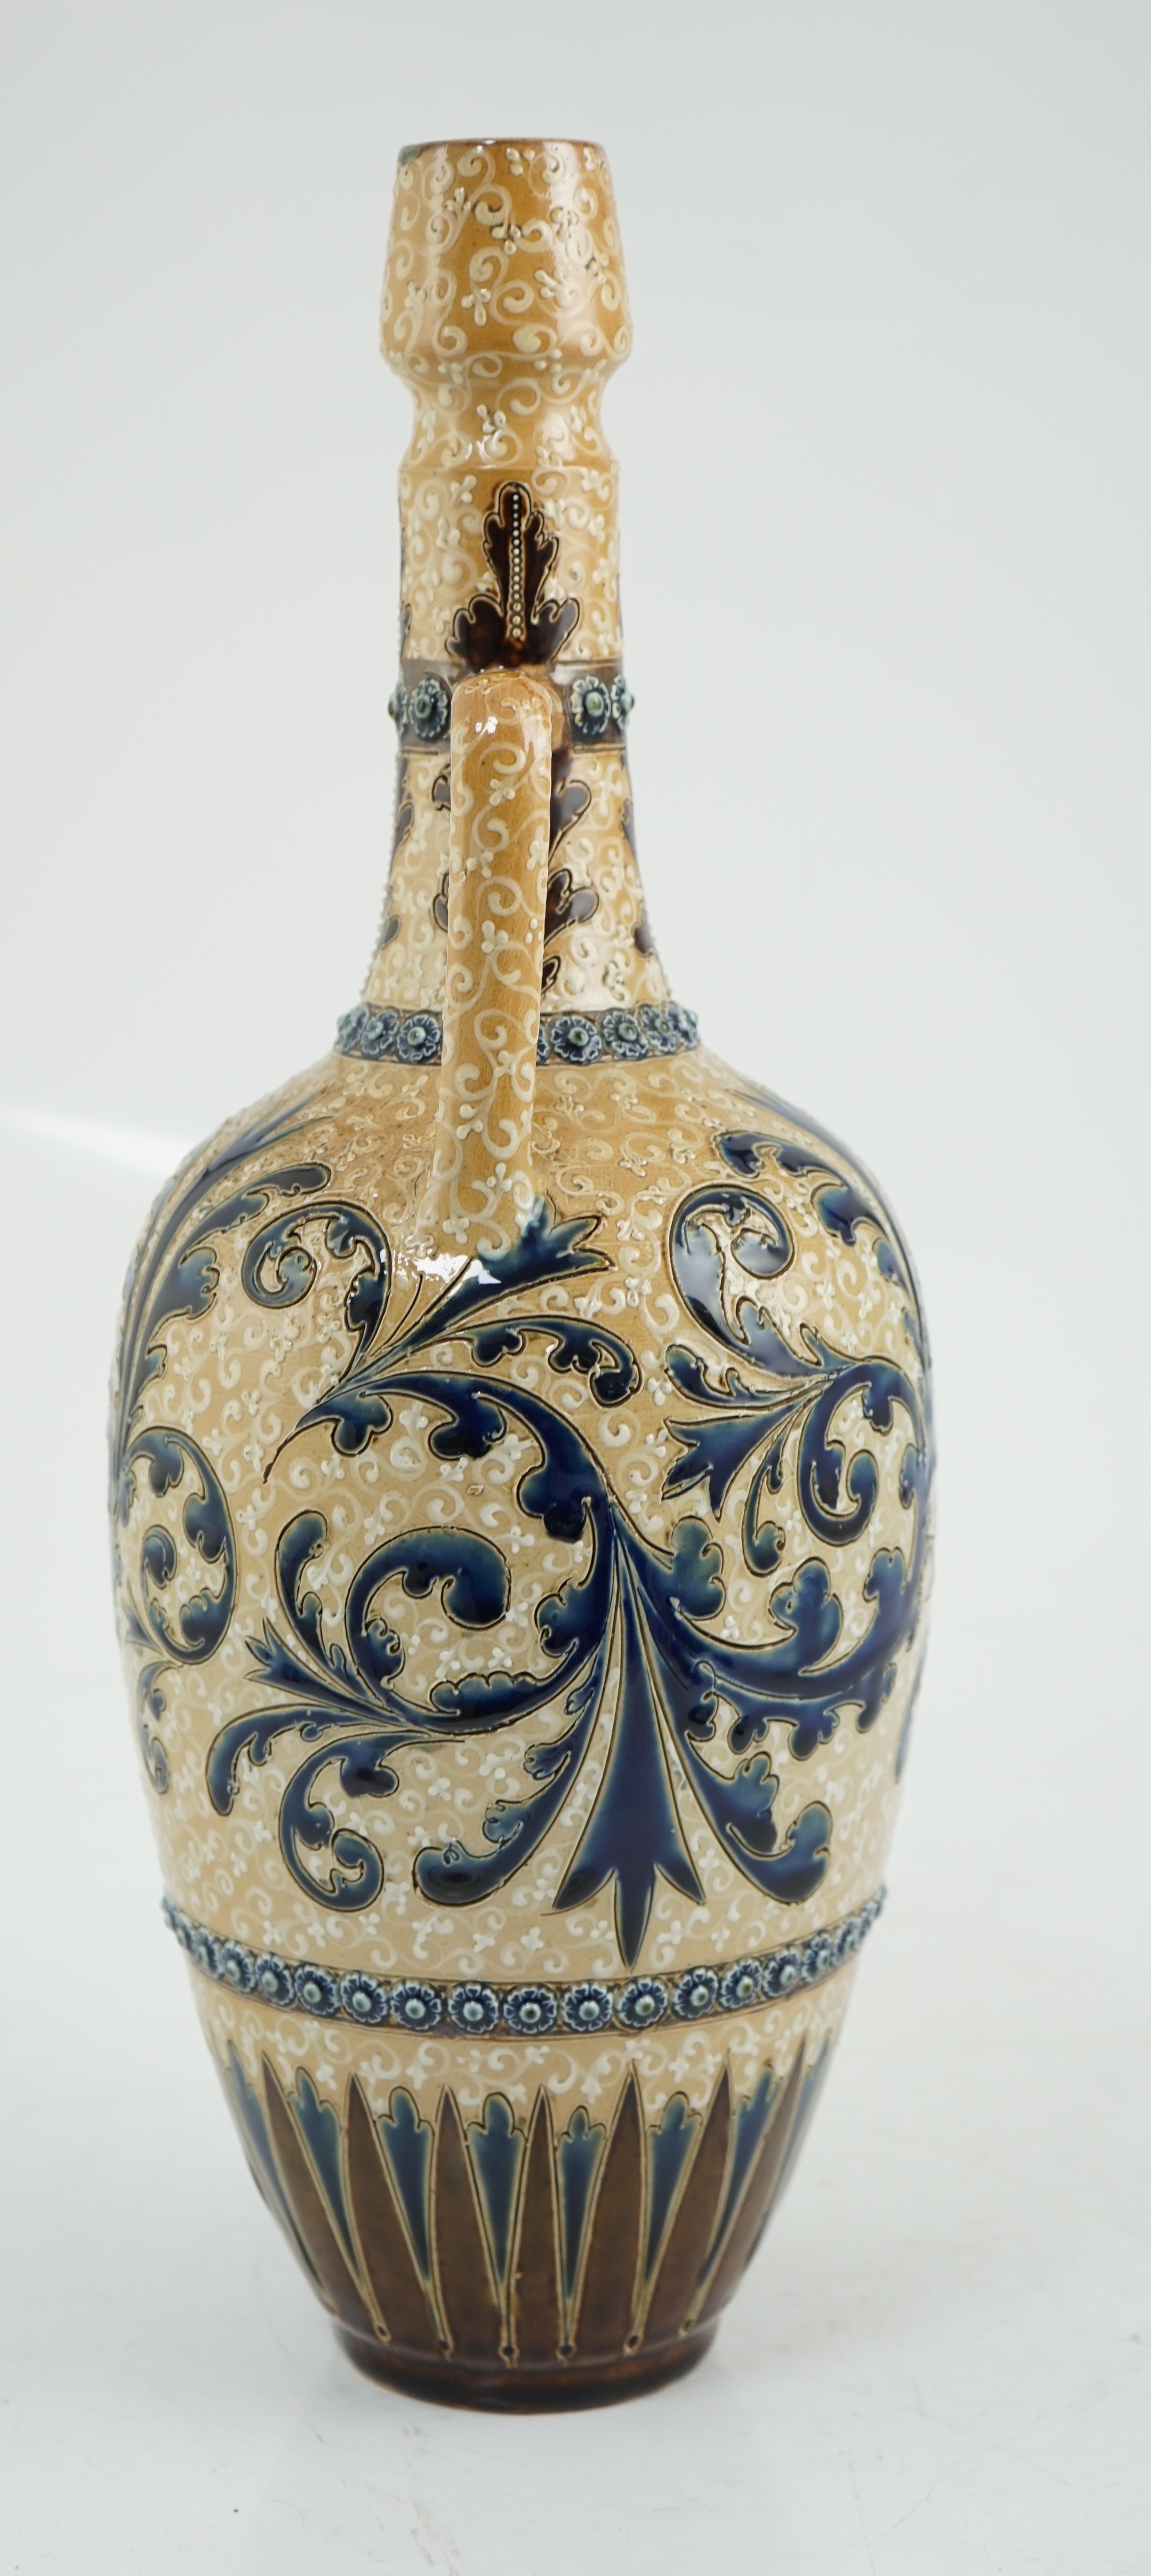 George Tinworth for Doulton Lambeth, a large stoneware vase